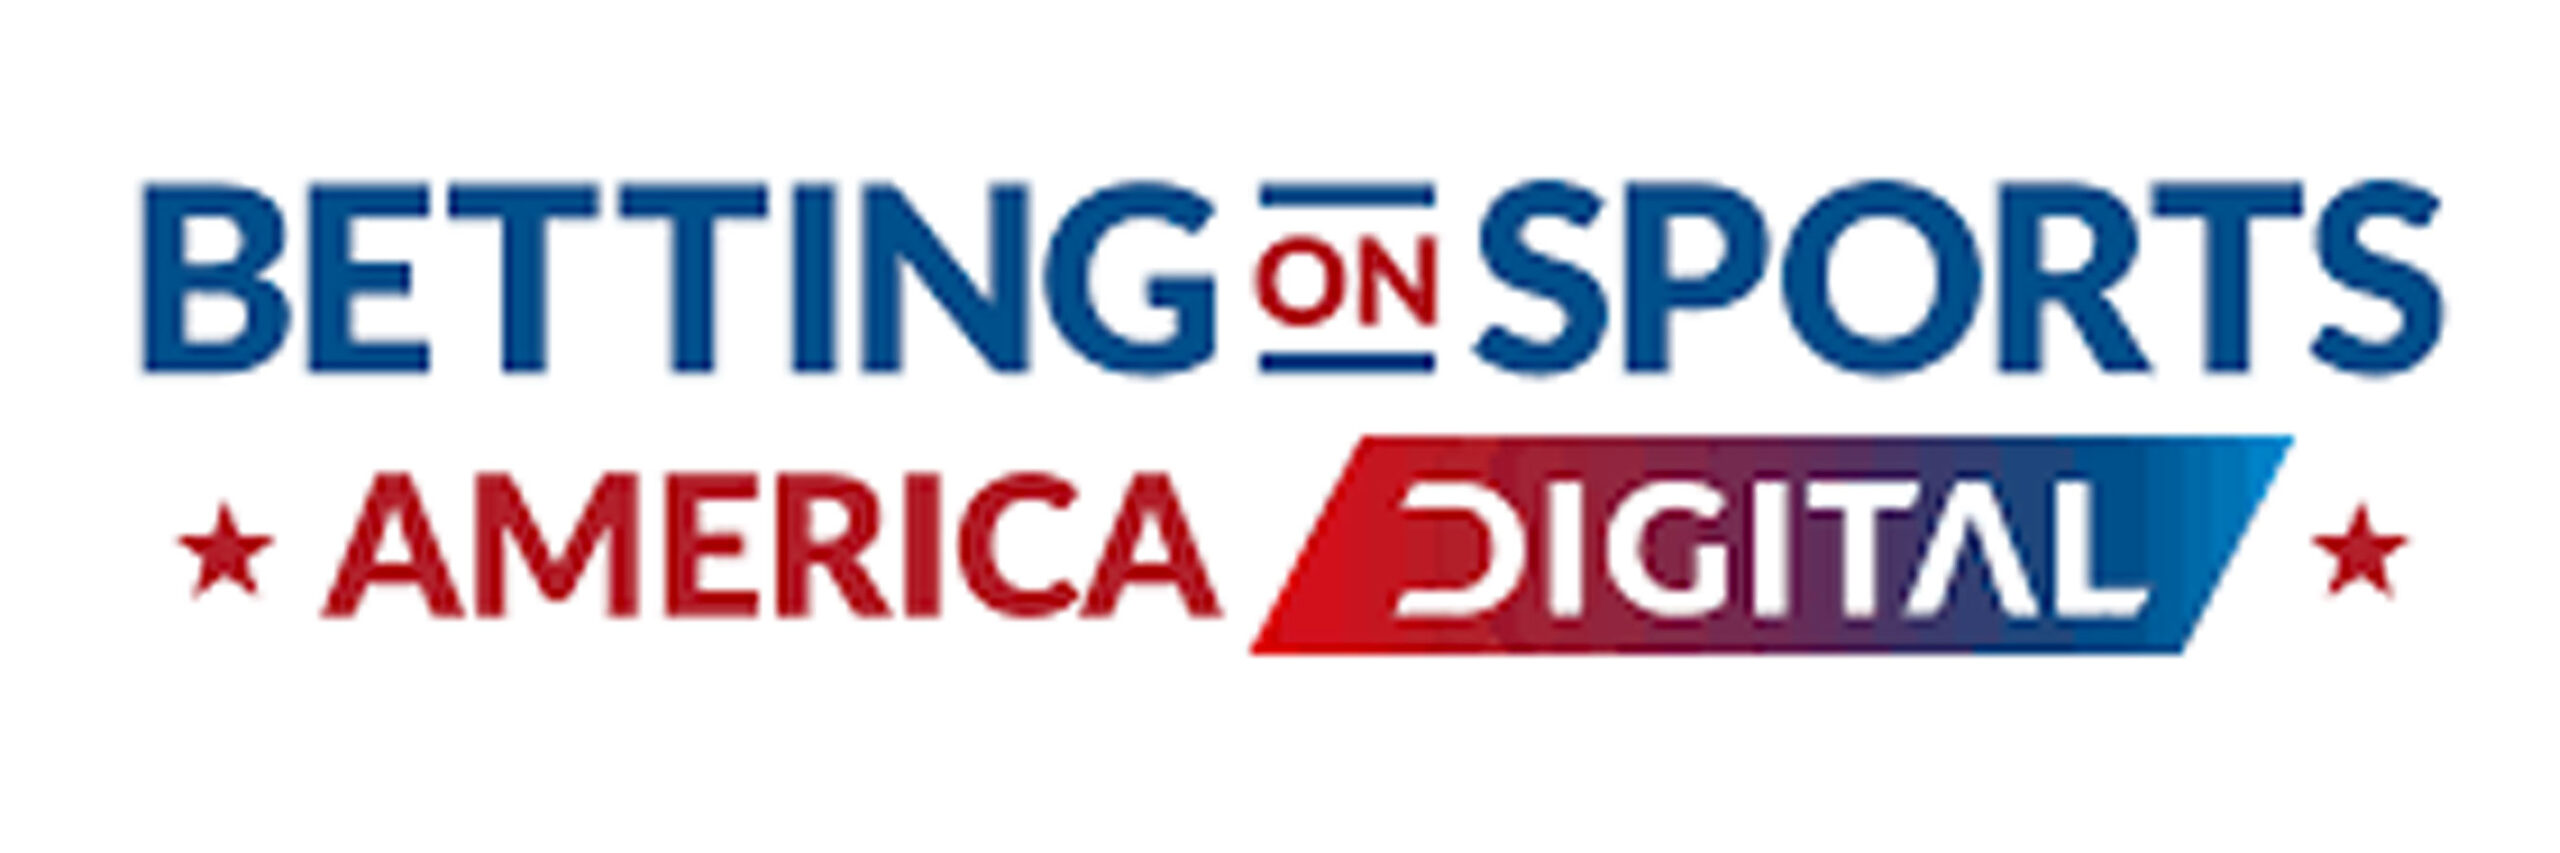 betting-on-sports-america-logo